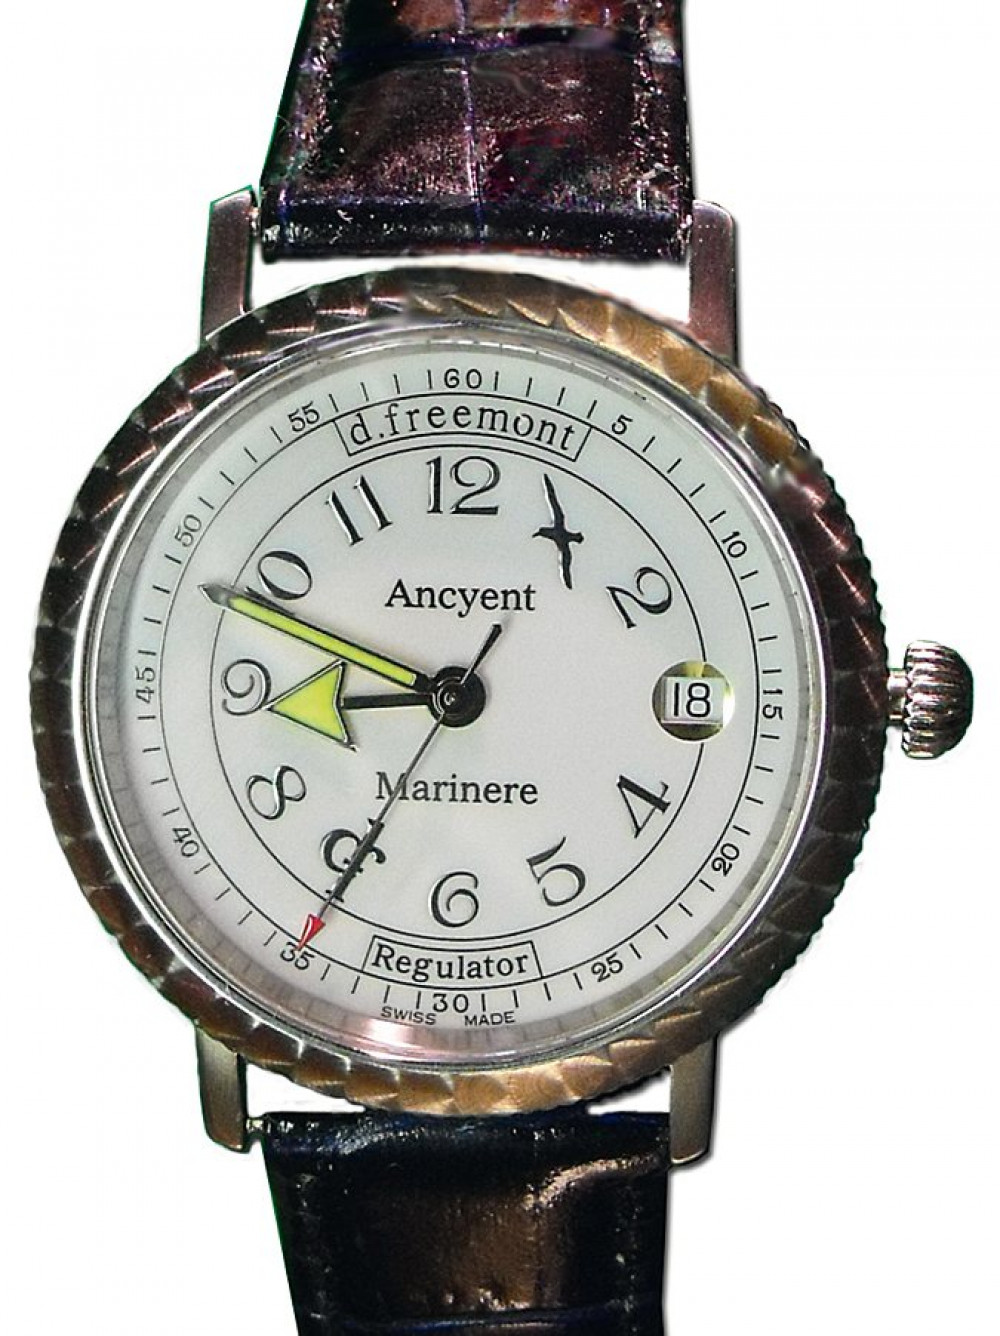 Zegarek firmy d.freemont Swiss Watch, model Ancyent Marinere Regulator